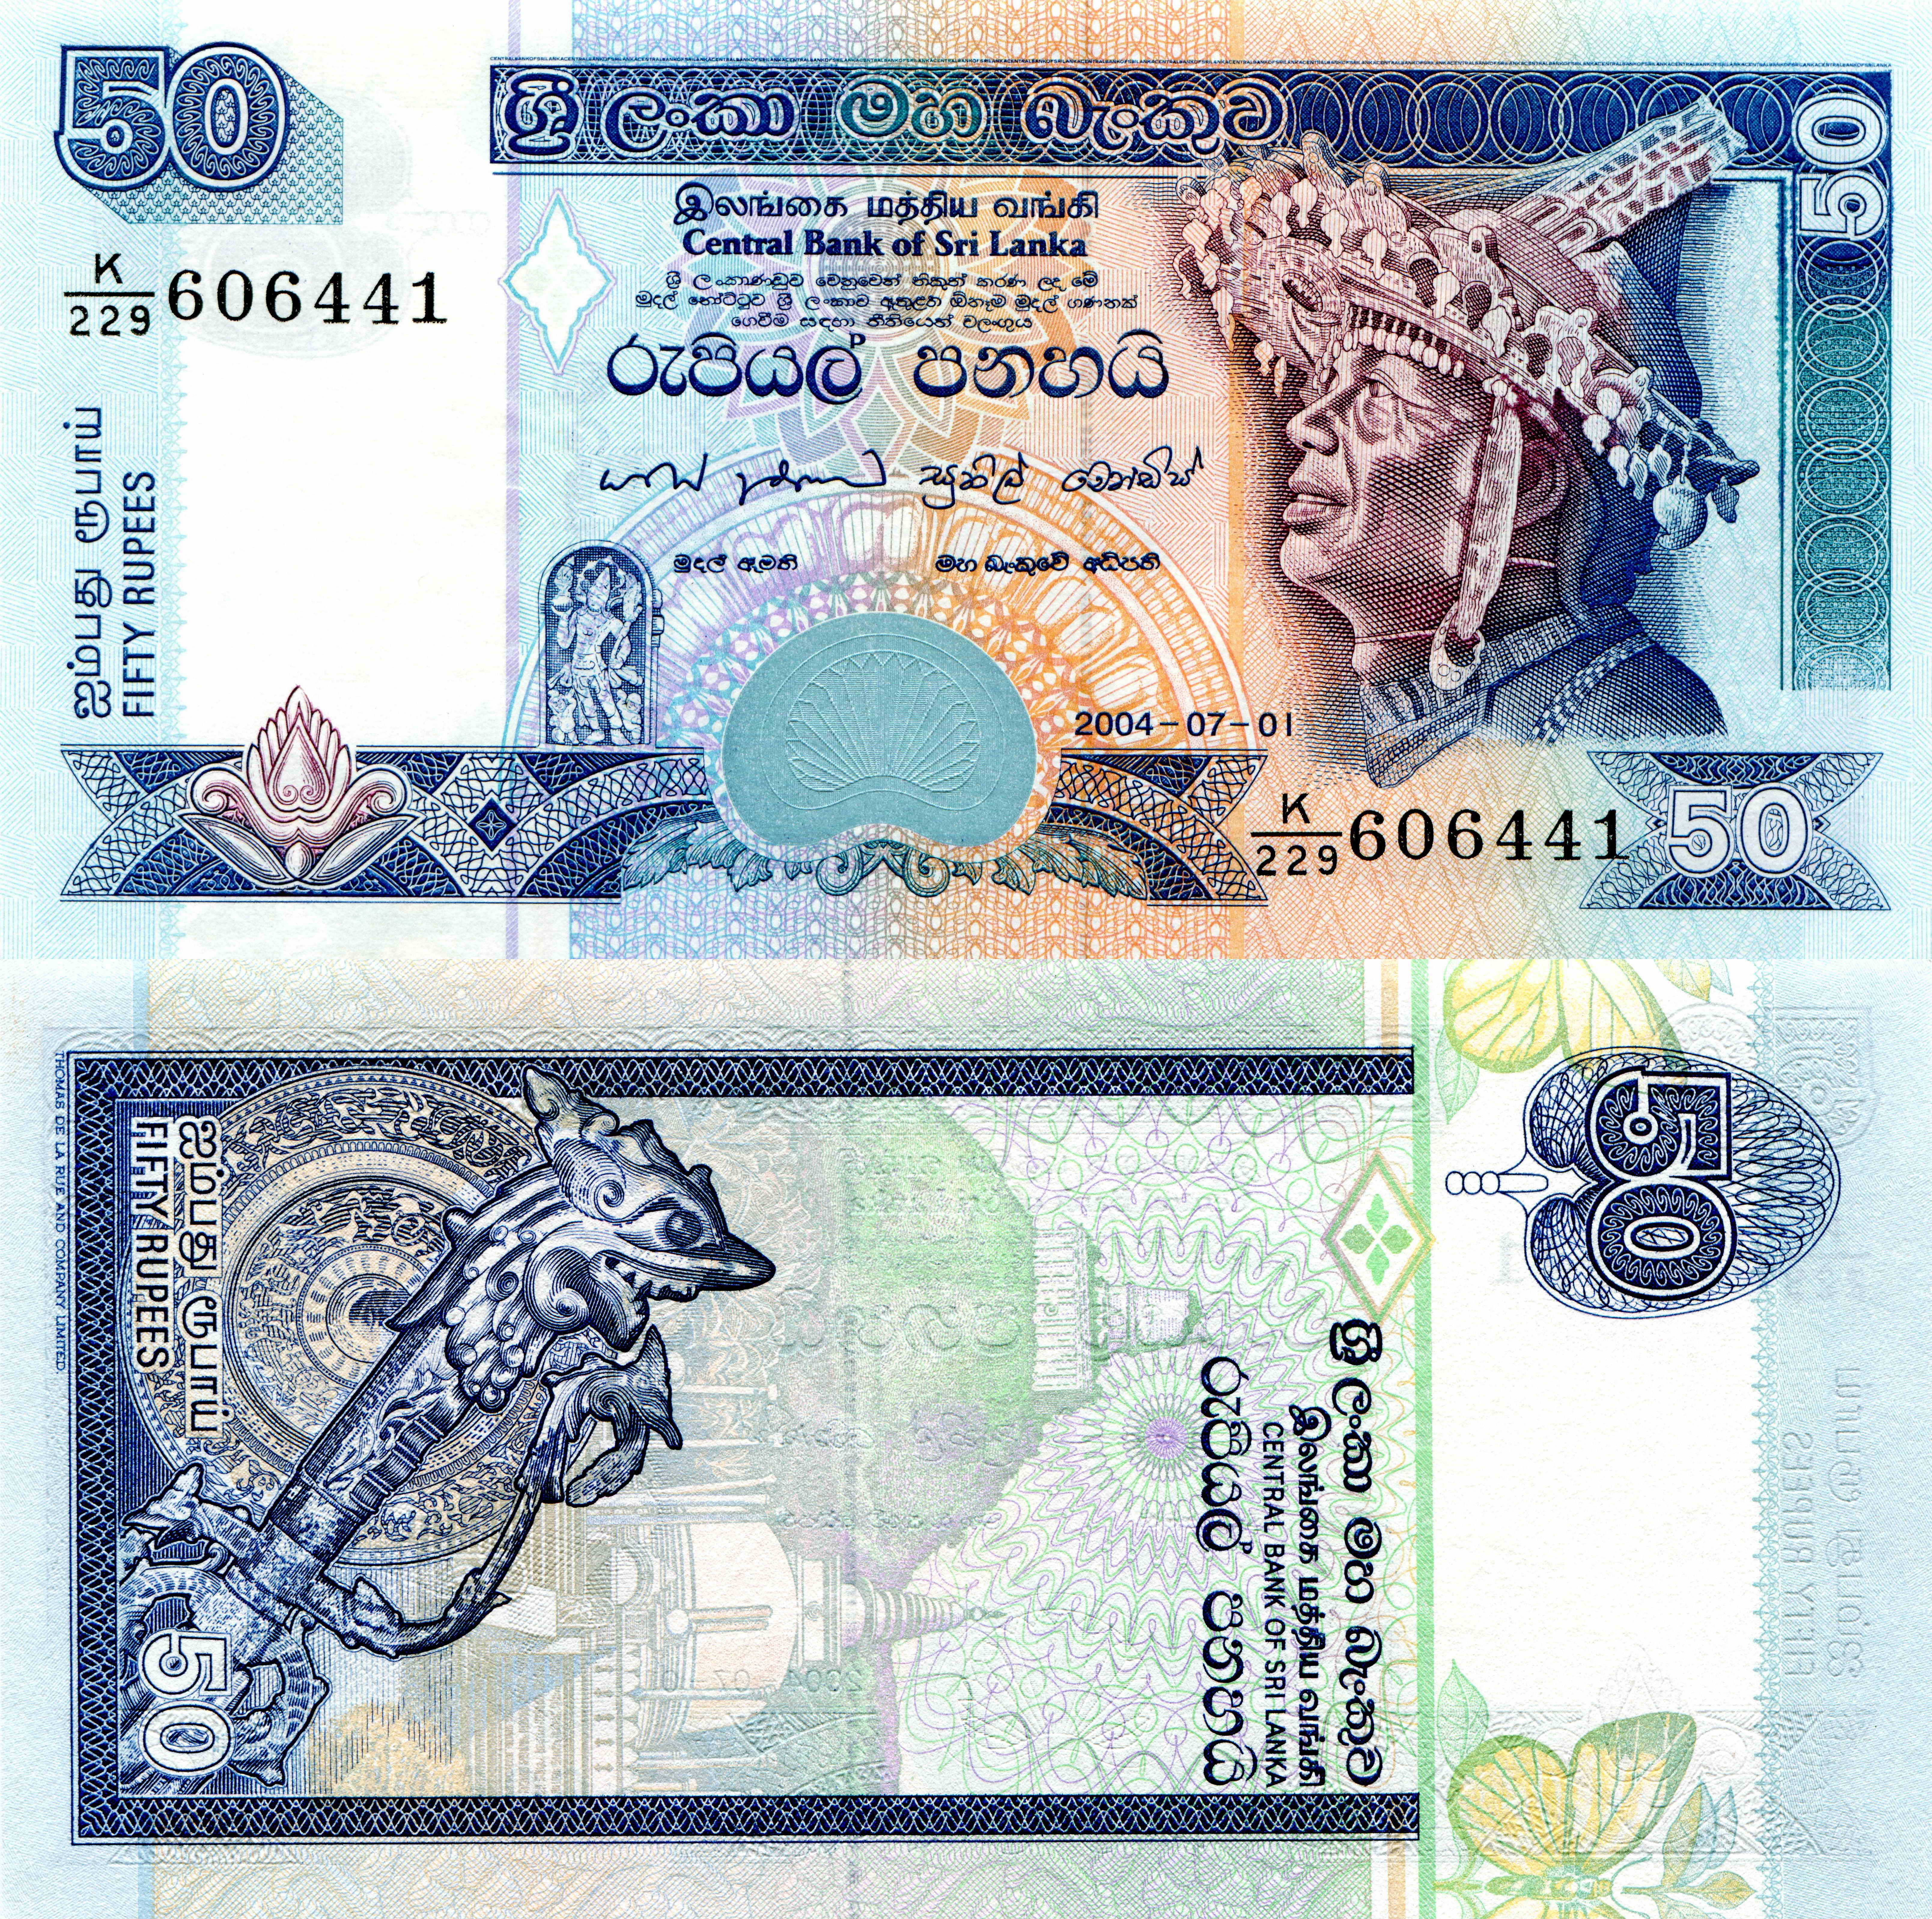 Wallpaper Banknotes Sri Lanka 50 rupees Money 6431x6387